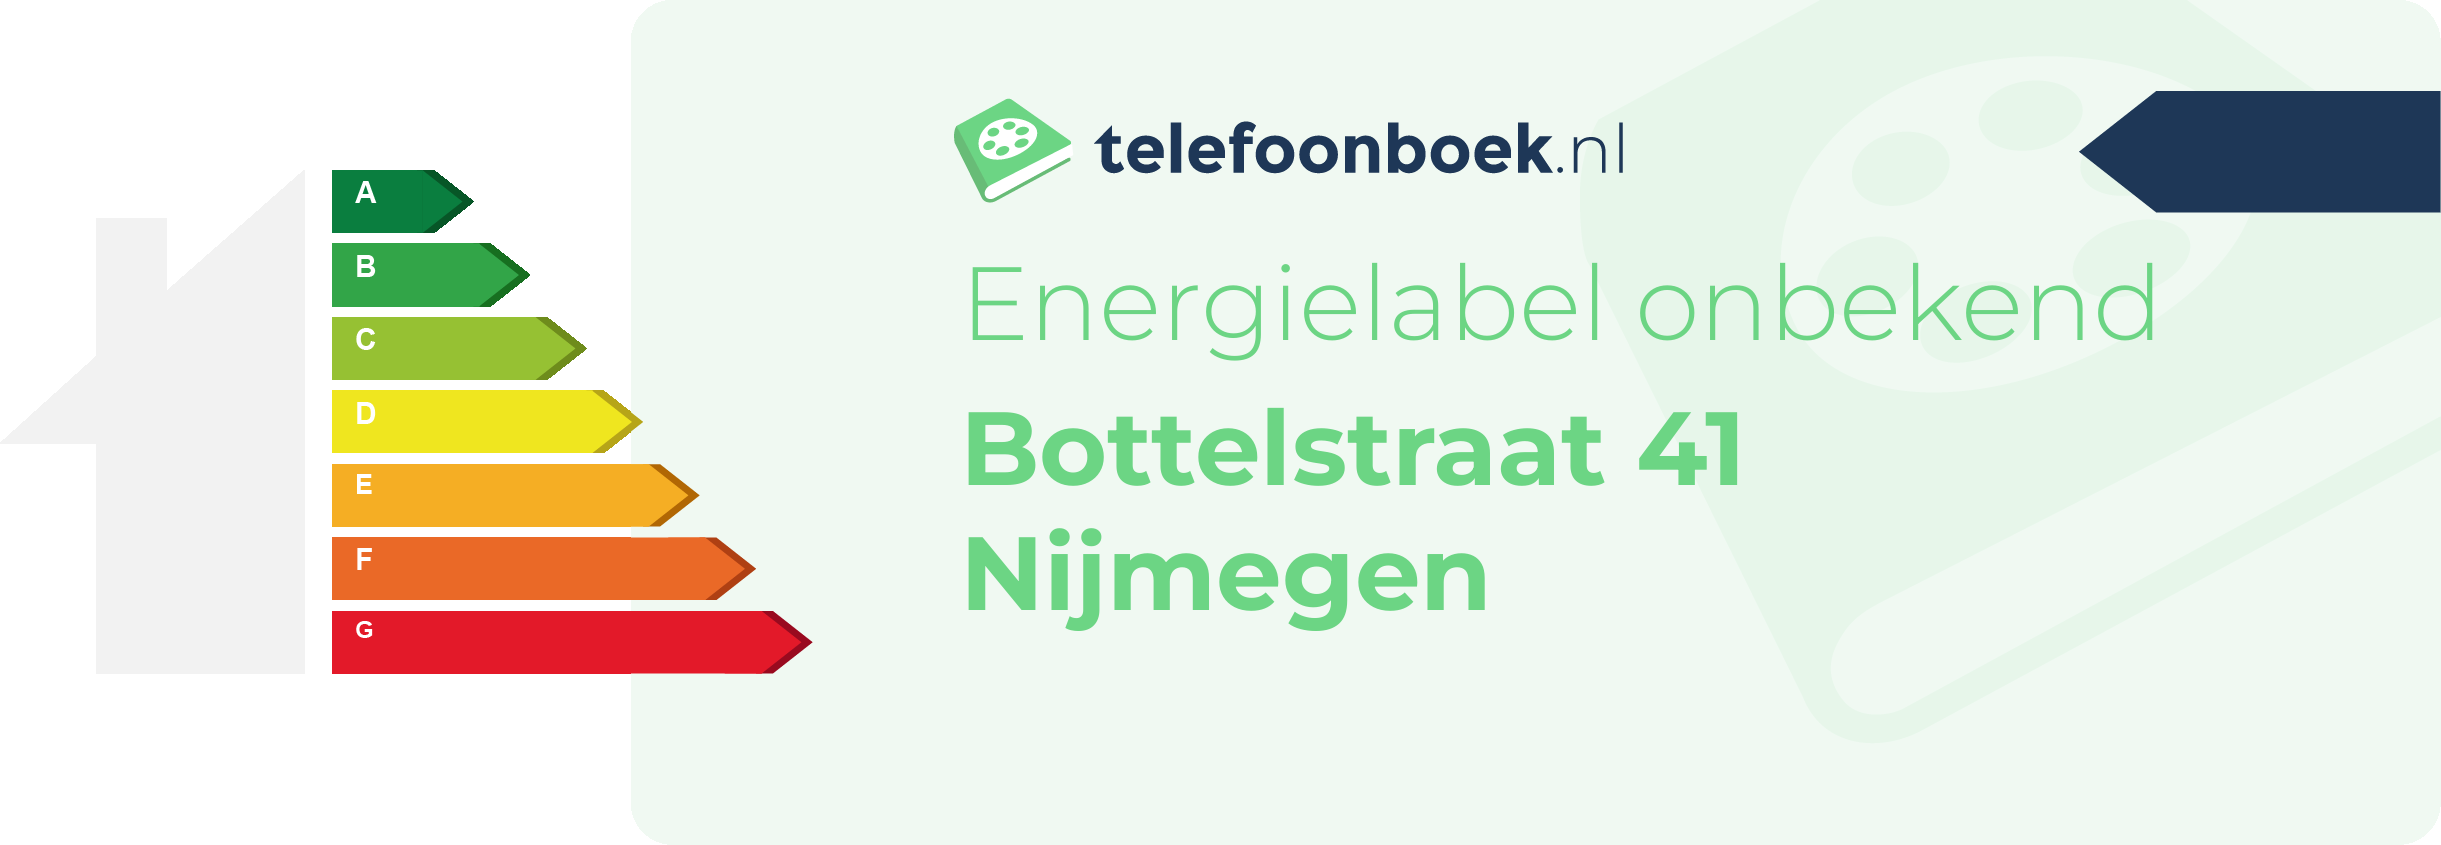 Energielabel Bottelstraat 41 Nijmegen